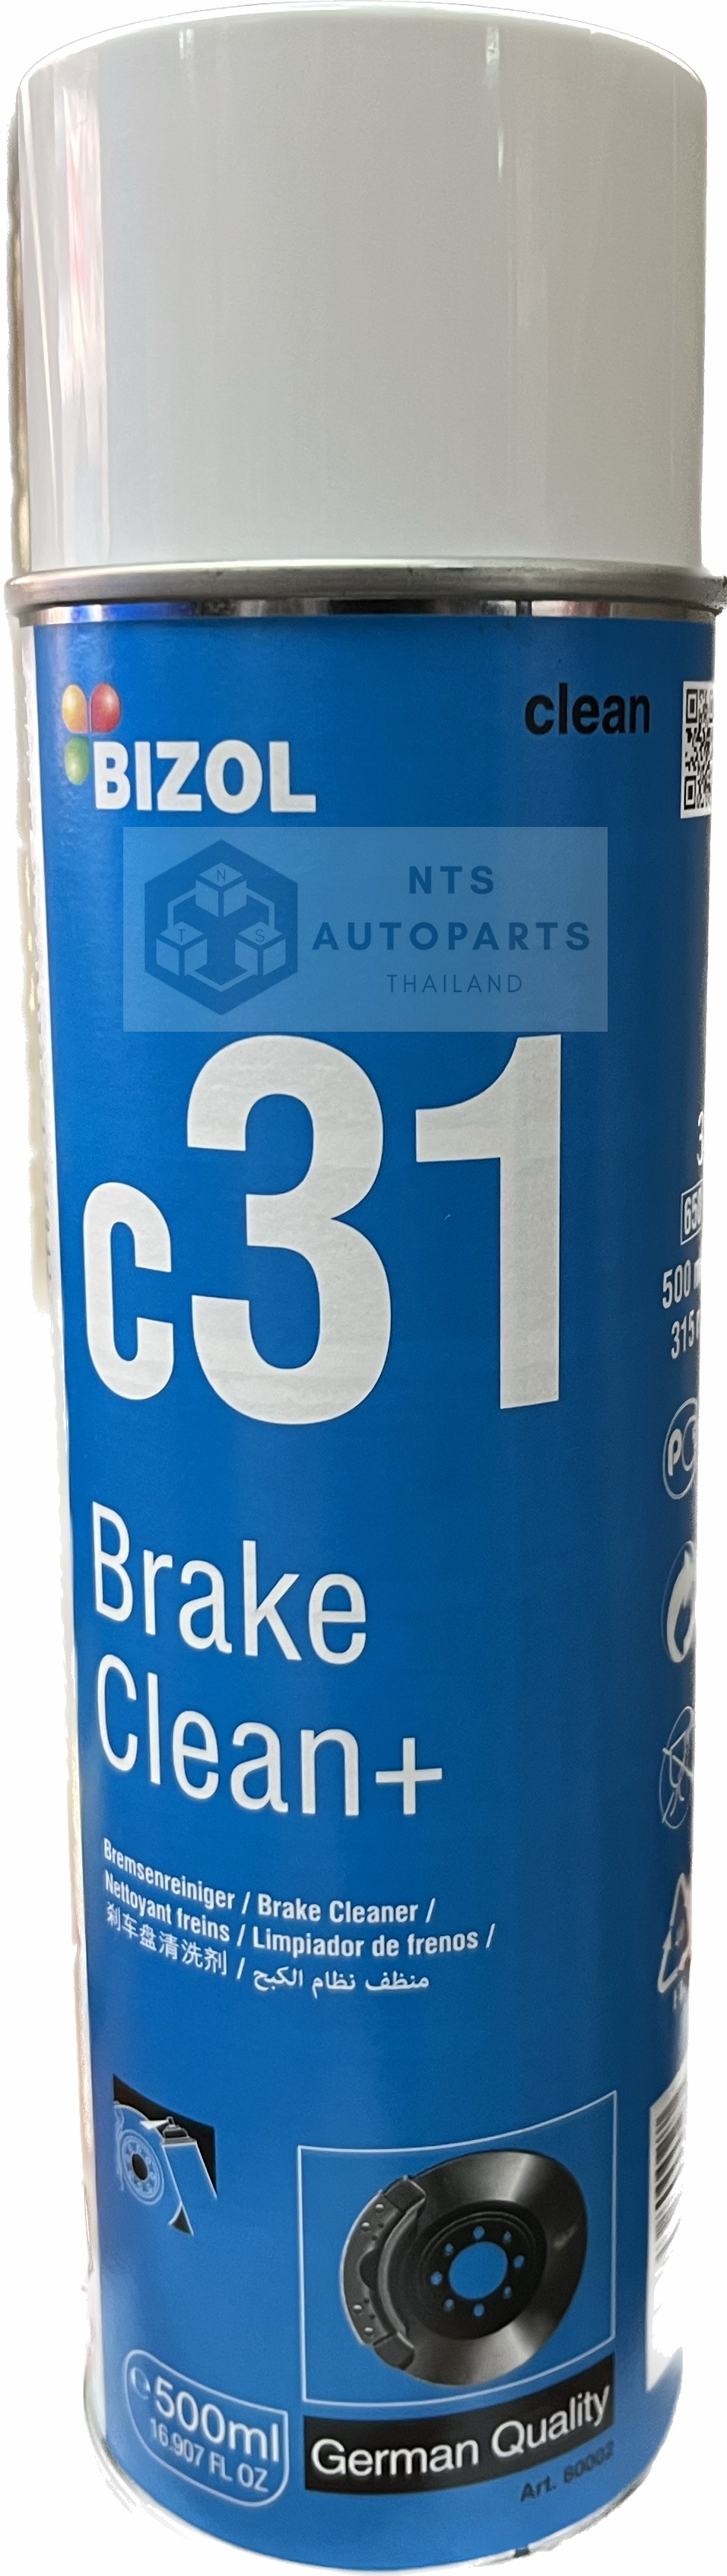 BIZOL Brake Clean+, c31 80002 Brake Cleaner – ML Performance